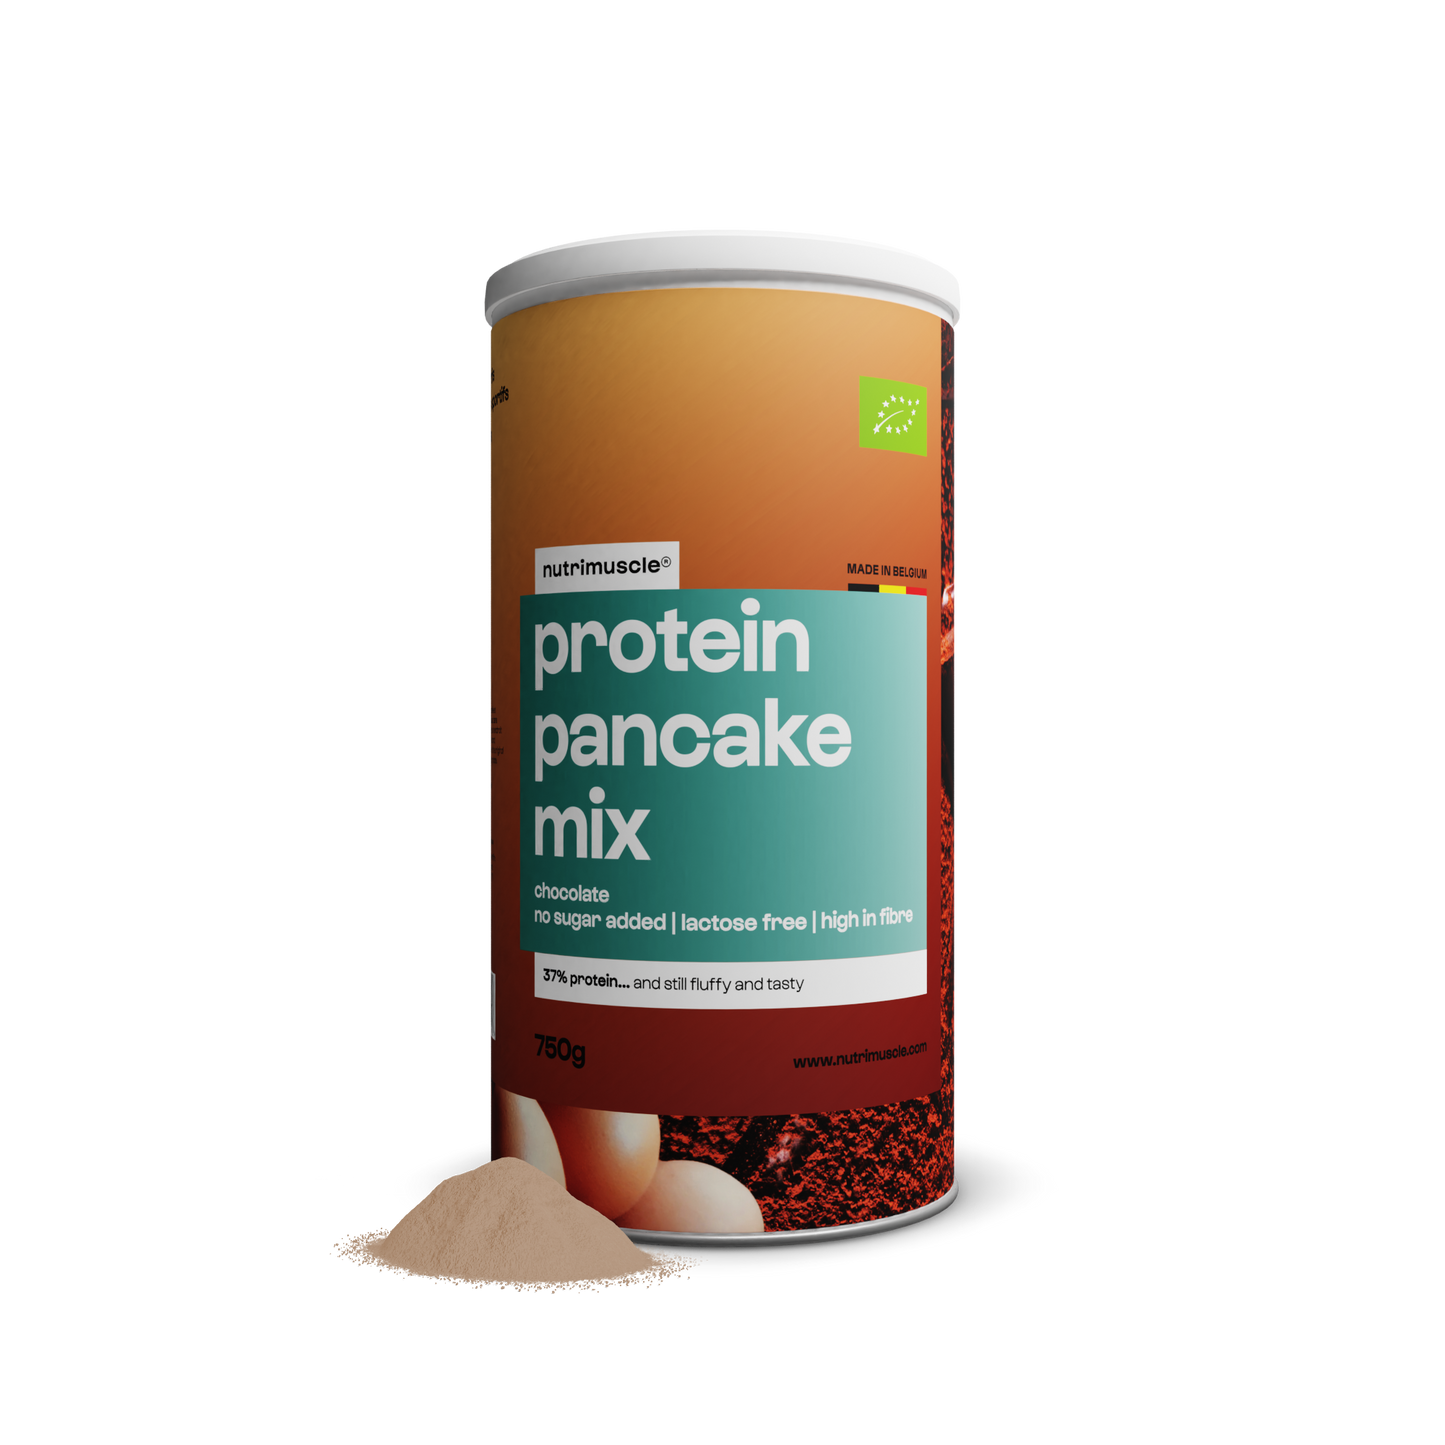 Mix for organic protein pancakes